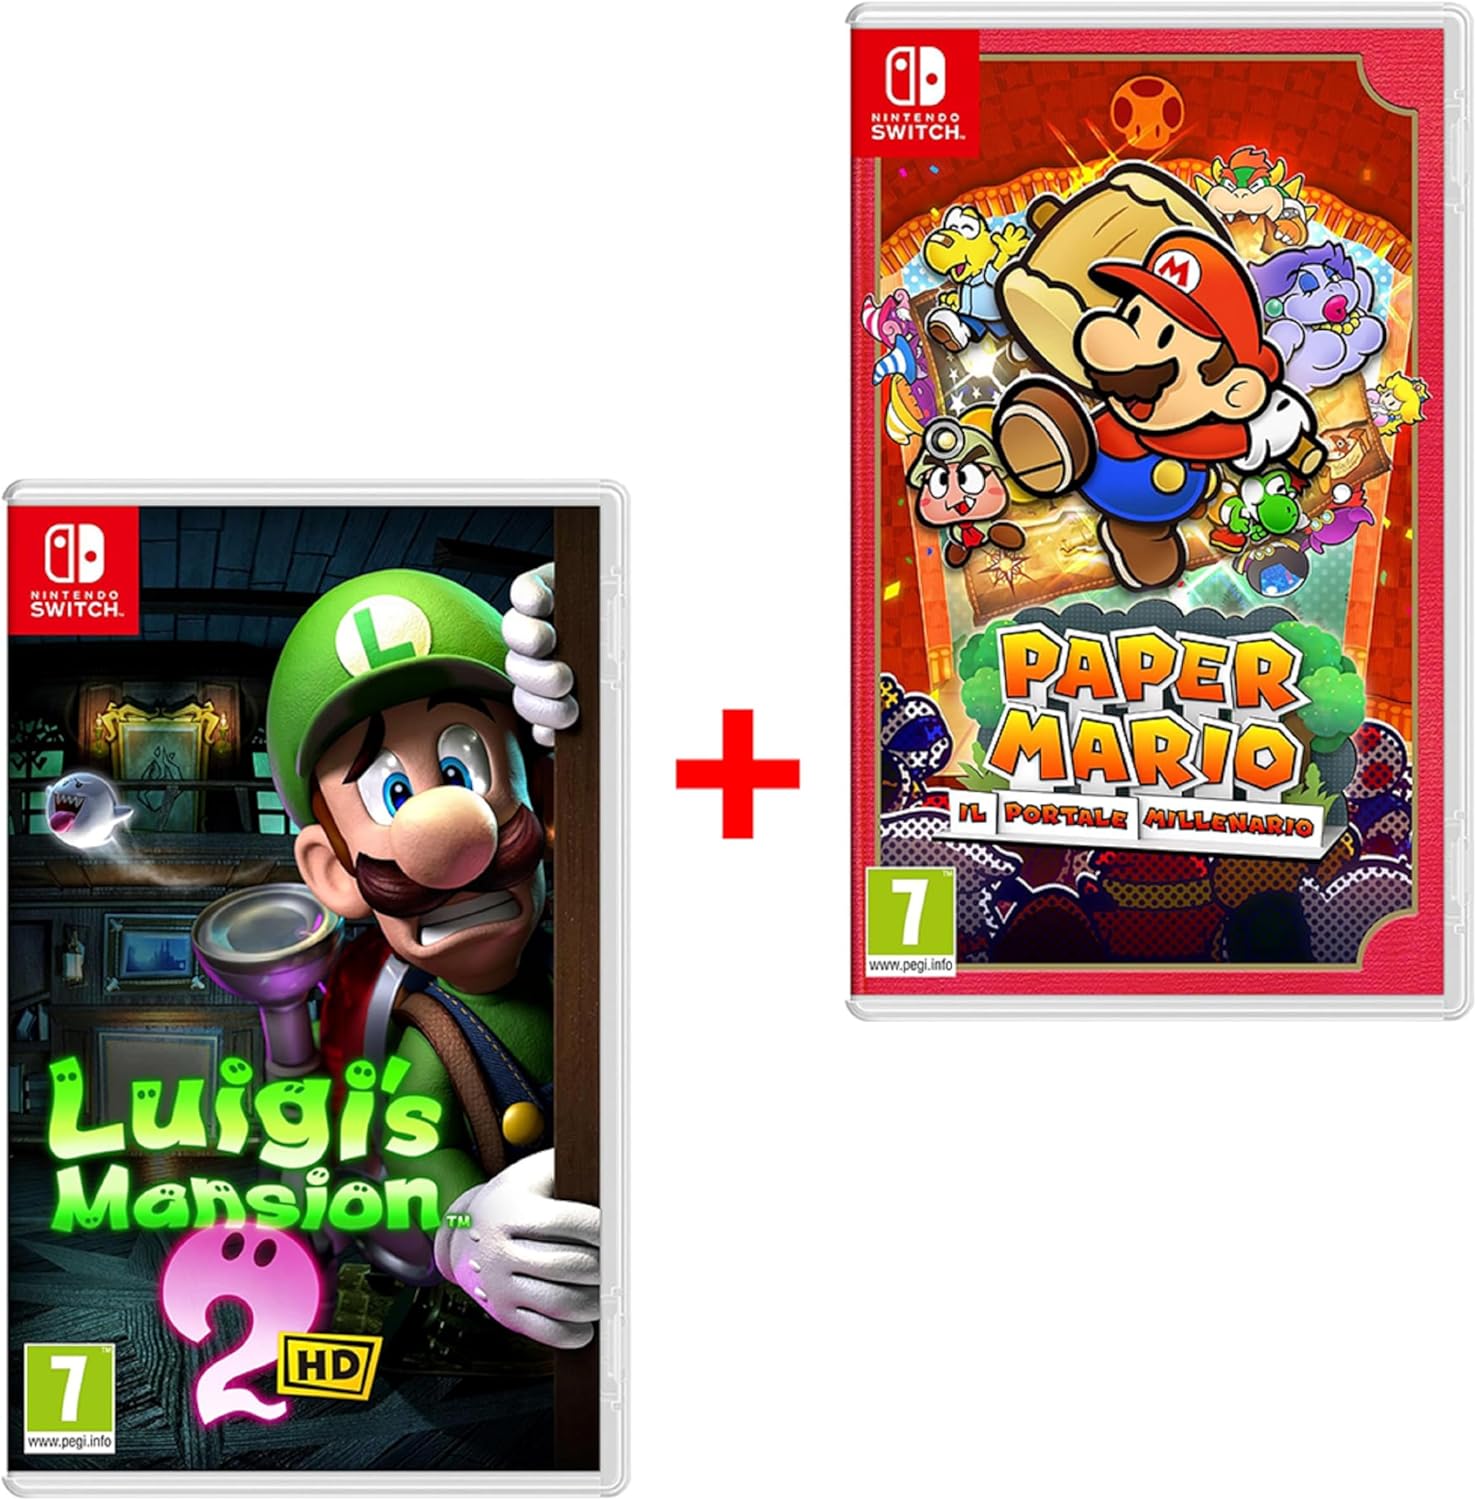 Paper Mario: Il Portale Millenario + Luigi’s Mansion 2 HD (Amazon)